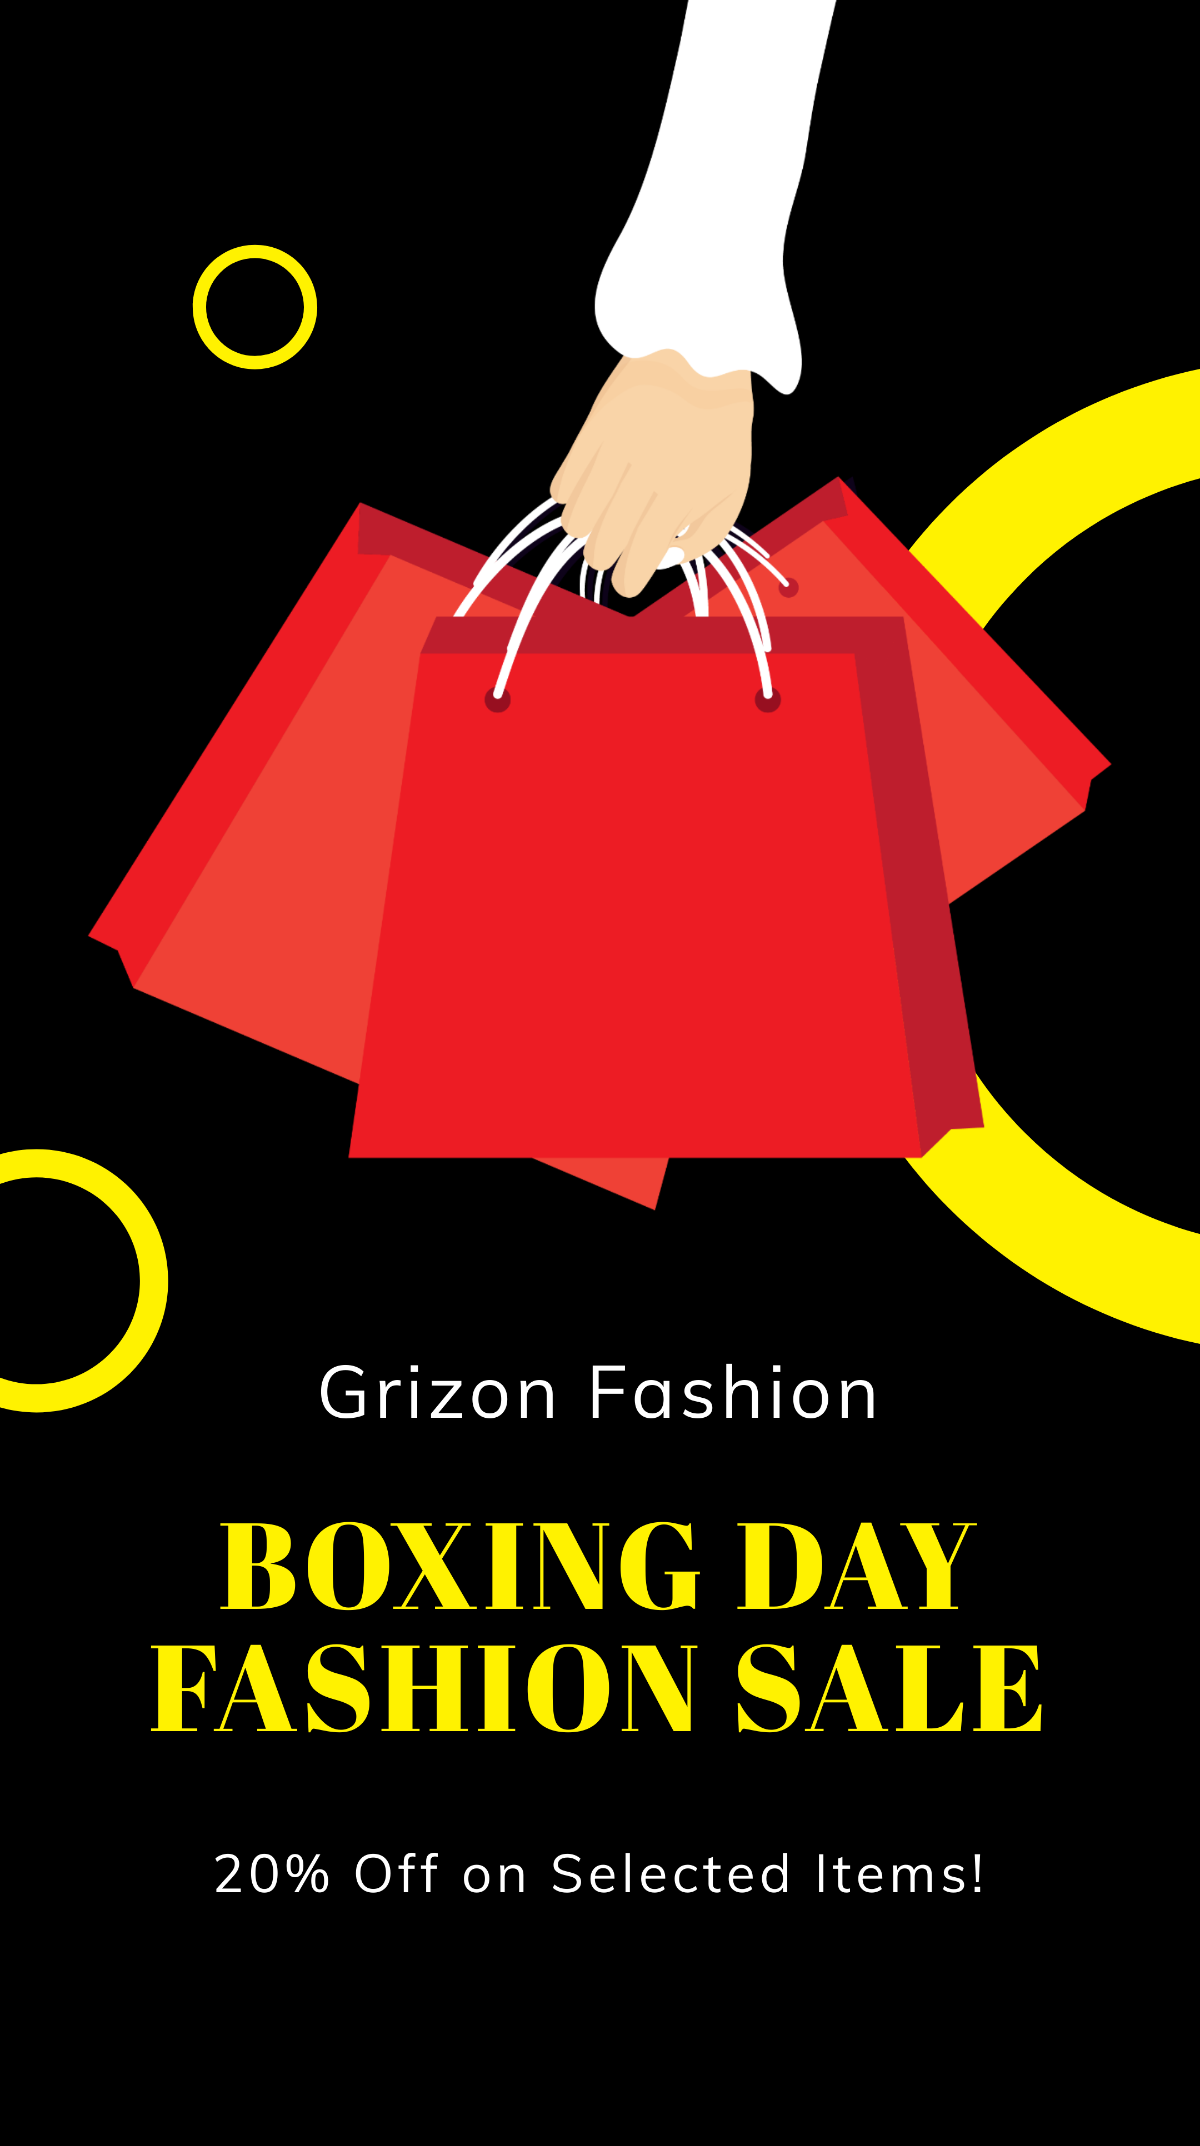 Free Boxing Day Fashion Sale WhatsApp Post Template